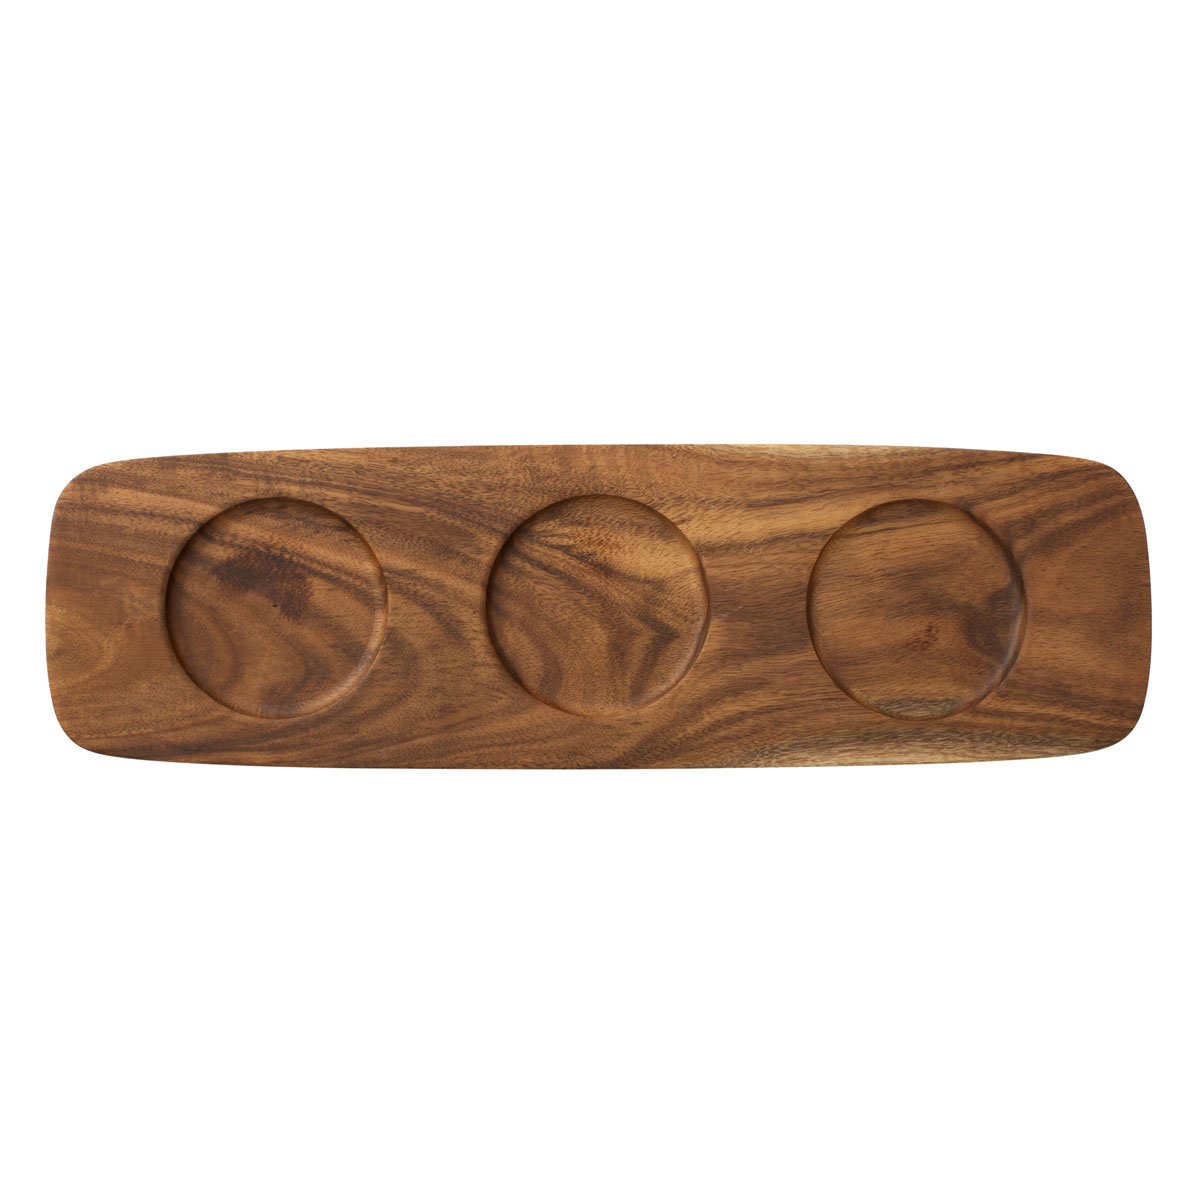 Villeroy and Boch Artesano Original Wood Tray for Dip Bowl